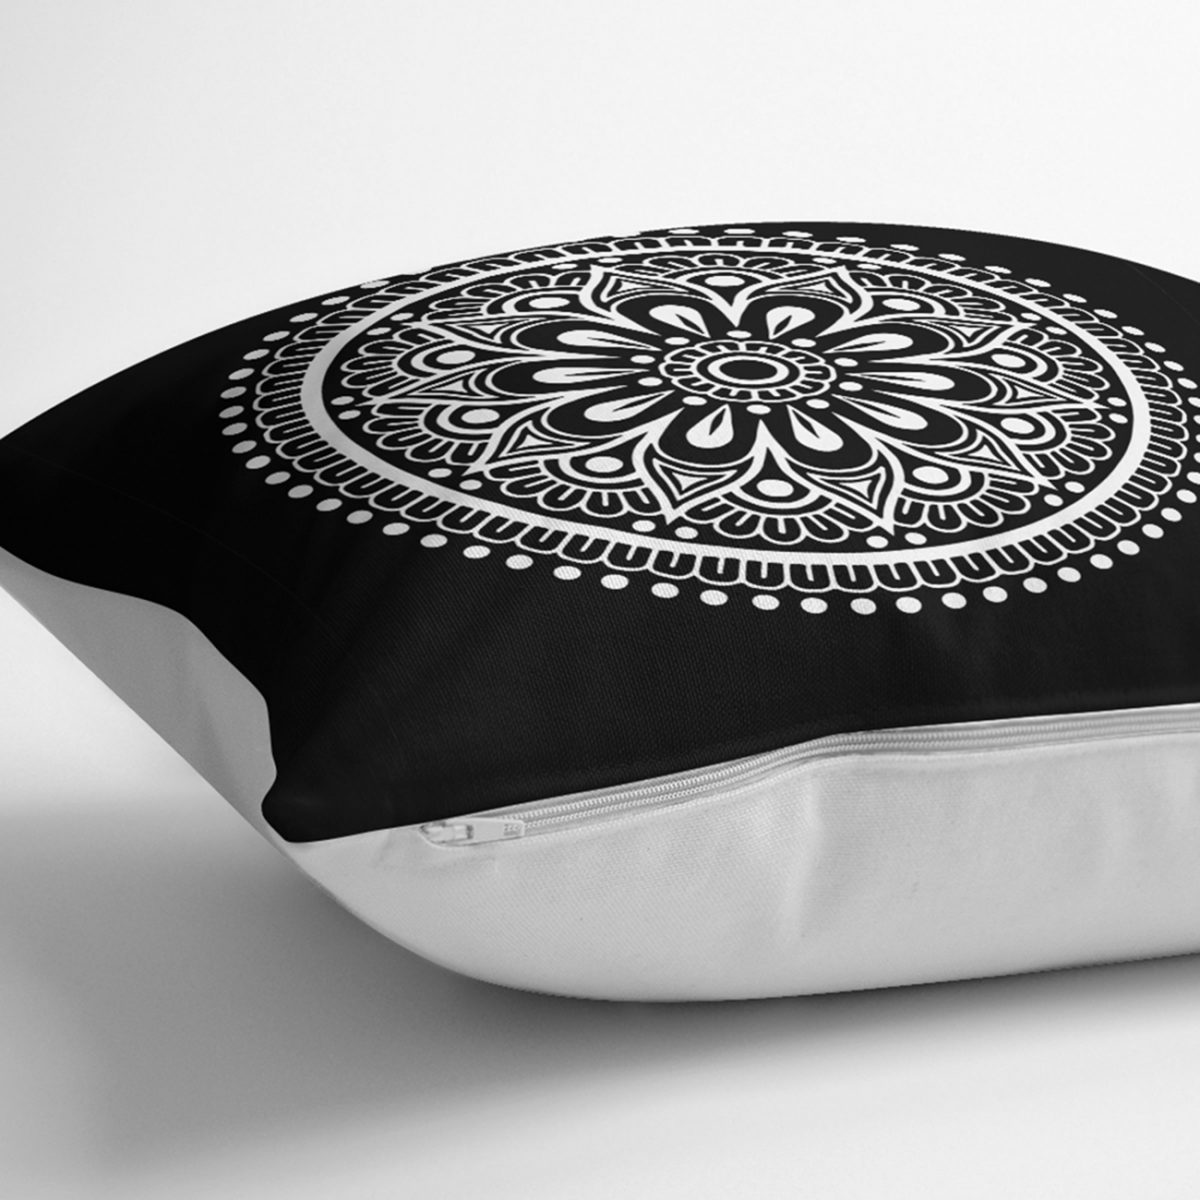 Siyah Beyaz Çiçek Desenli Mandala Motifli Kırlent Kılıfı Realhomes